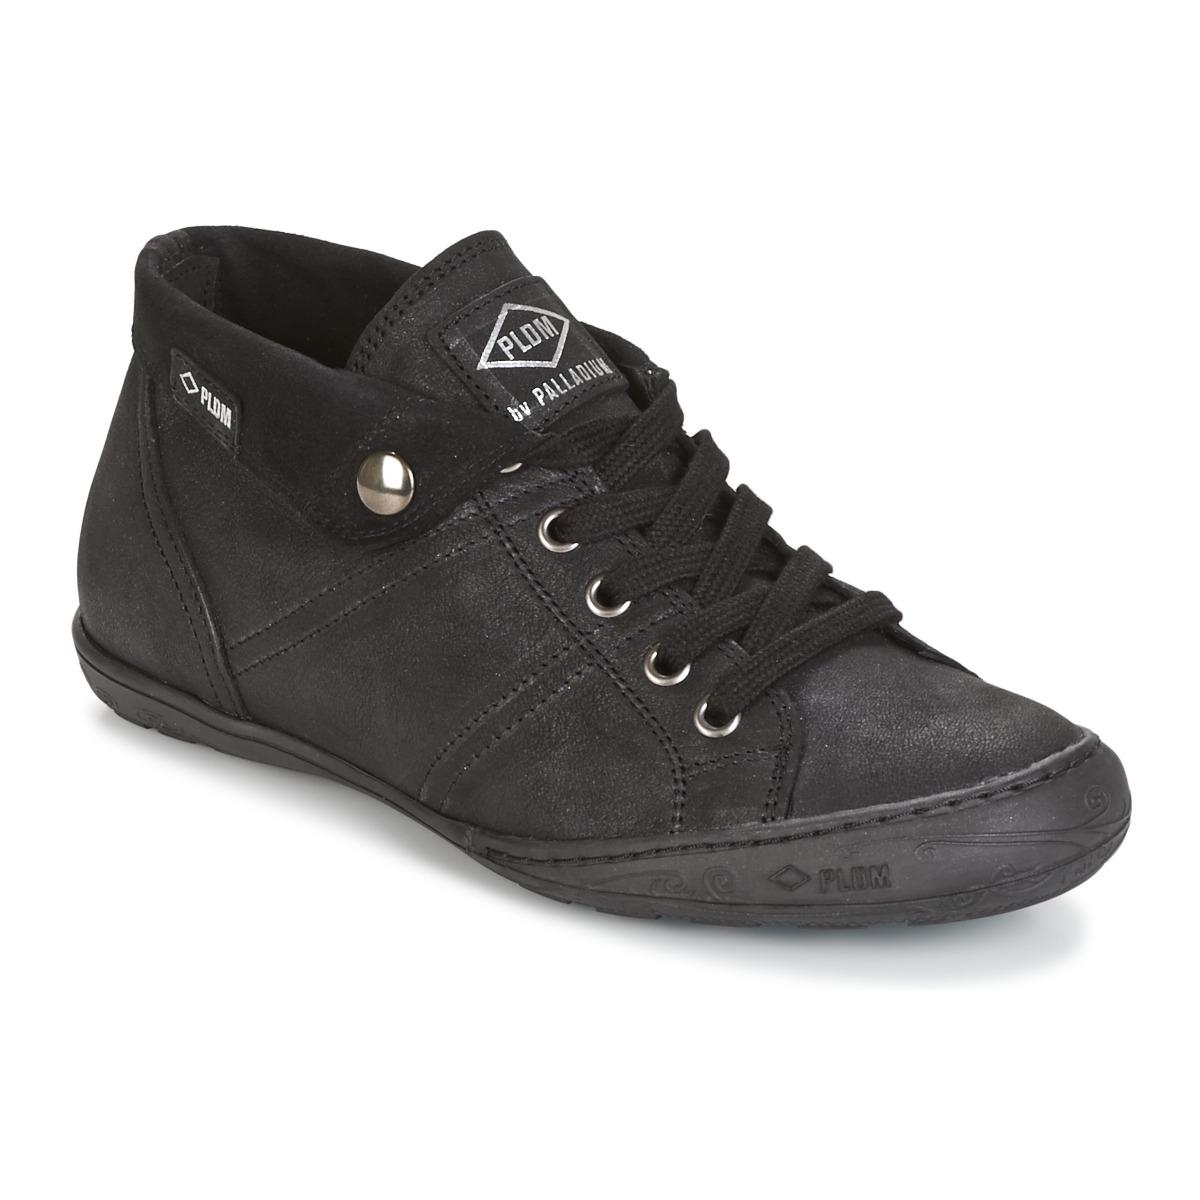 PLDM by Palladium Leather Gaetane Eol Shoes (high-top Trainers) in Black -  Lyst